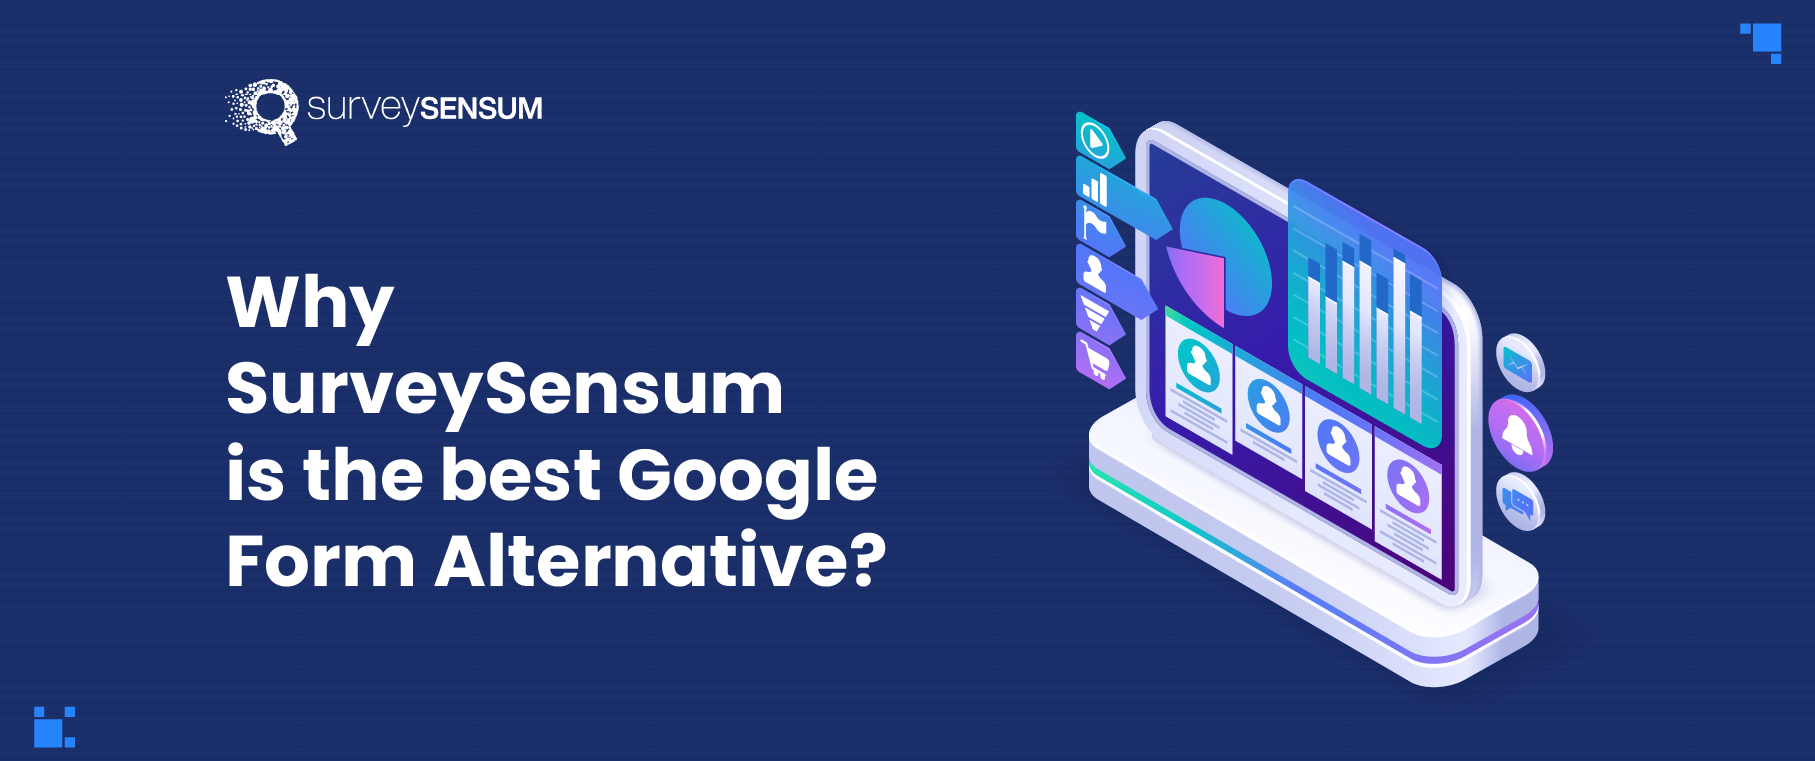 Why SurveySensum is the best Google Form Alternative?